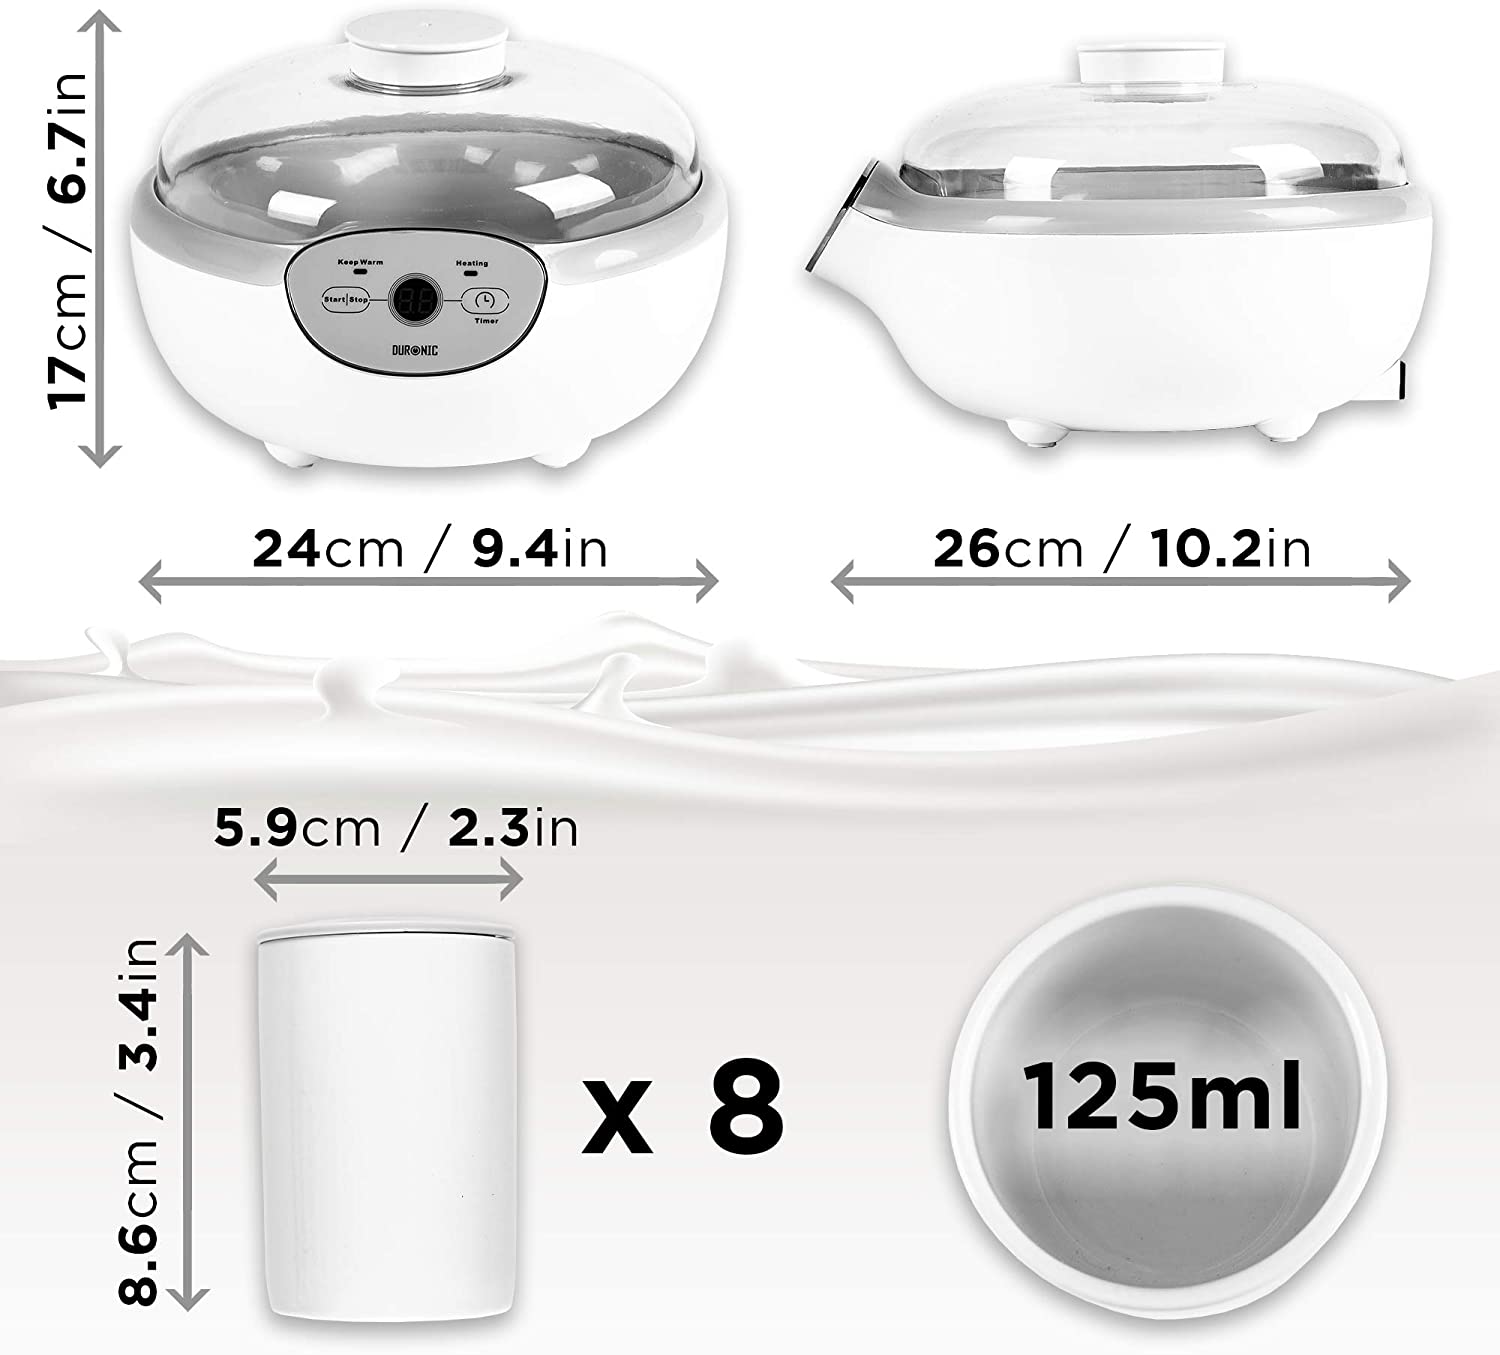 Duronic YM2 Yogurtiera elettrica automatica – 8 vasetti in ceramica da 125 ml - Macchina per yogurt con display digitale timer impostabile - Ideale per preparare yogurt fatti in casa